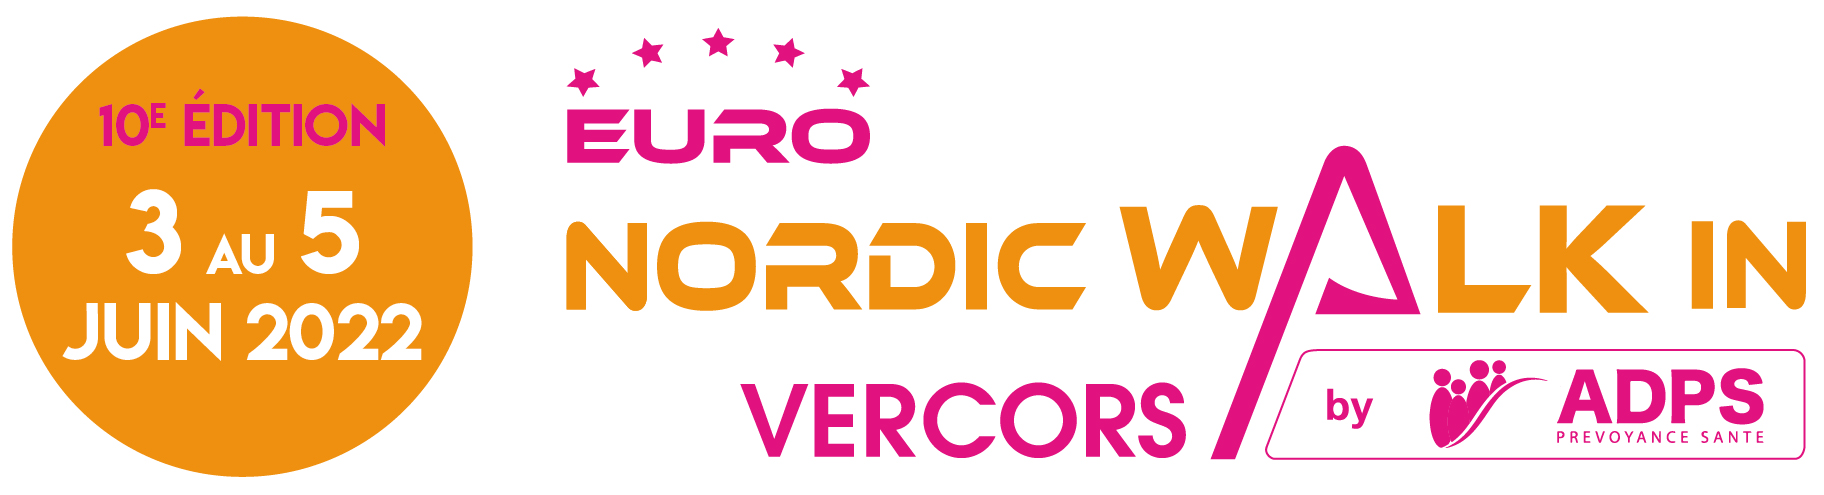 Euro NordicWalkin’Vercors